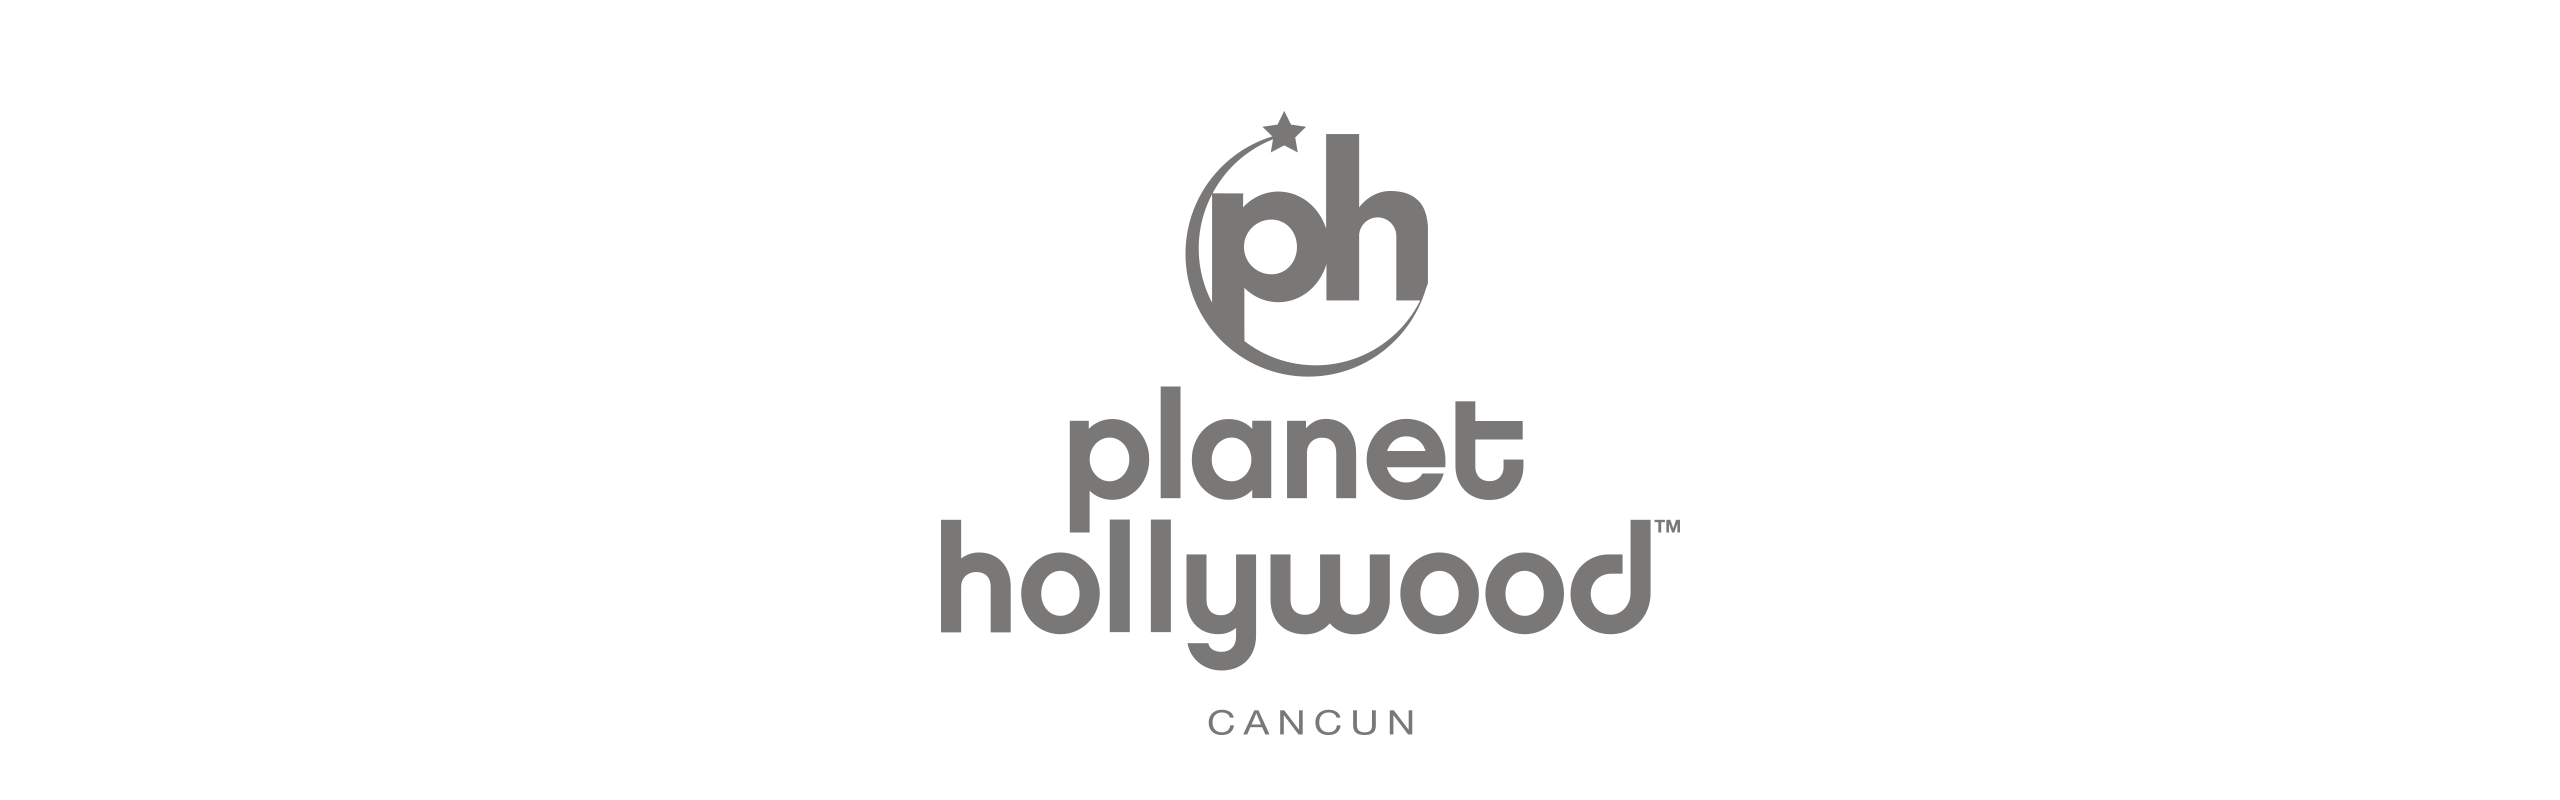 Planet-Hollywood